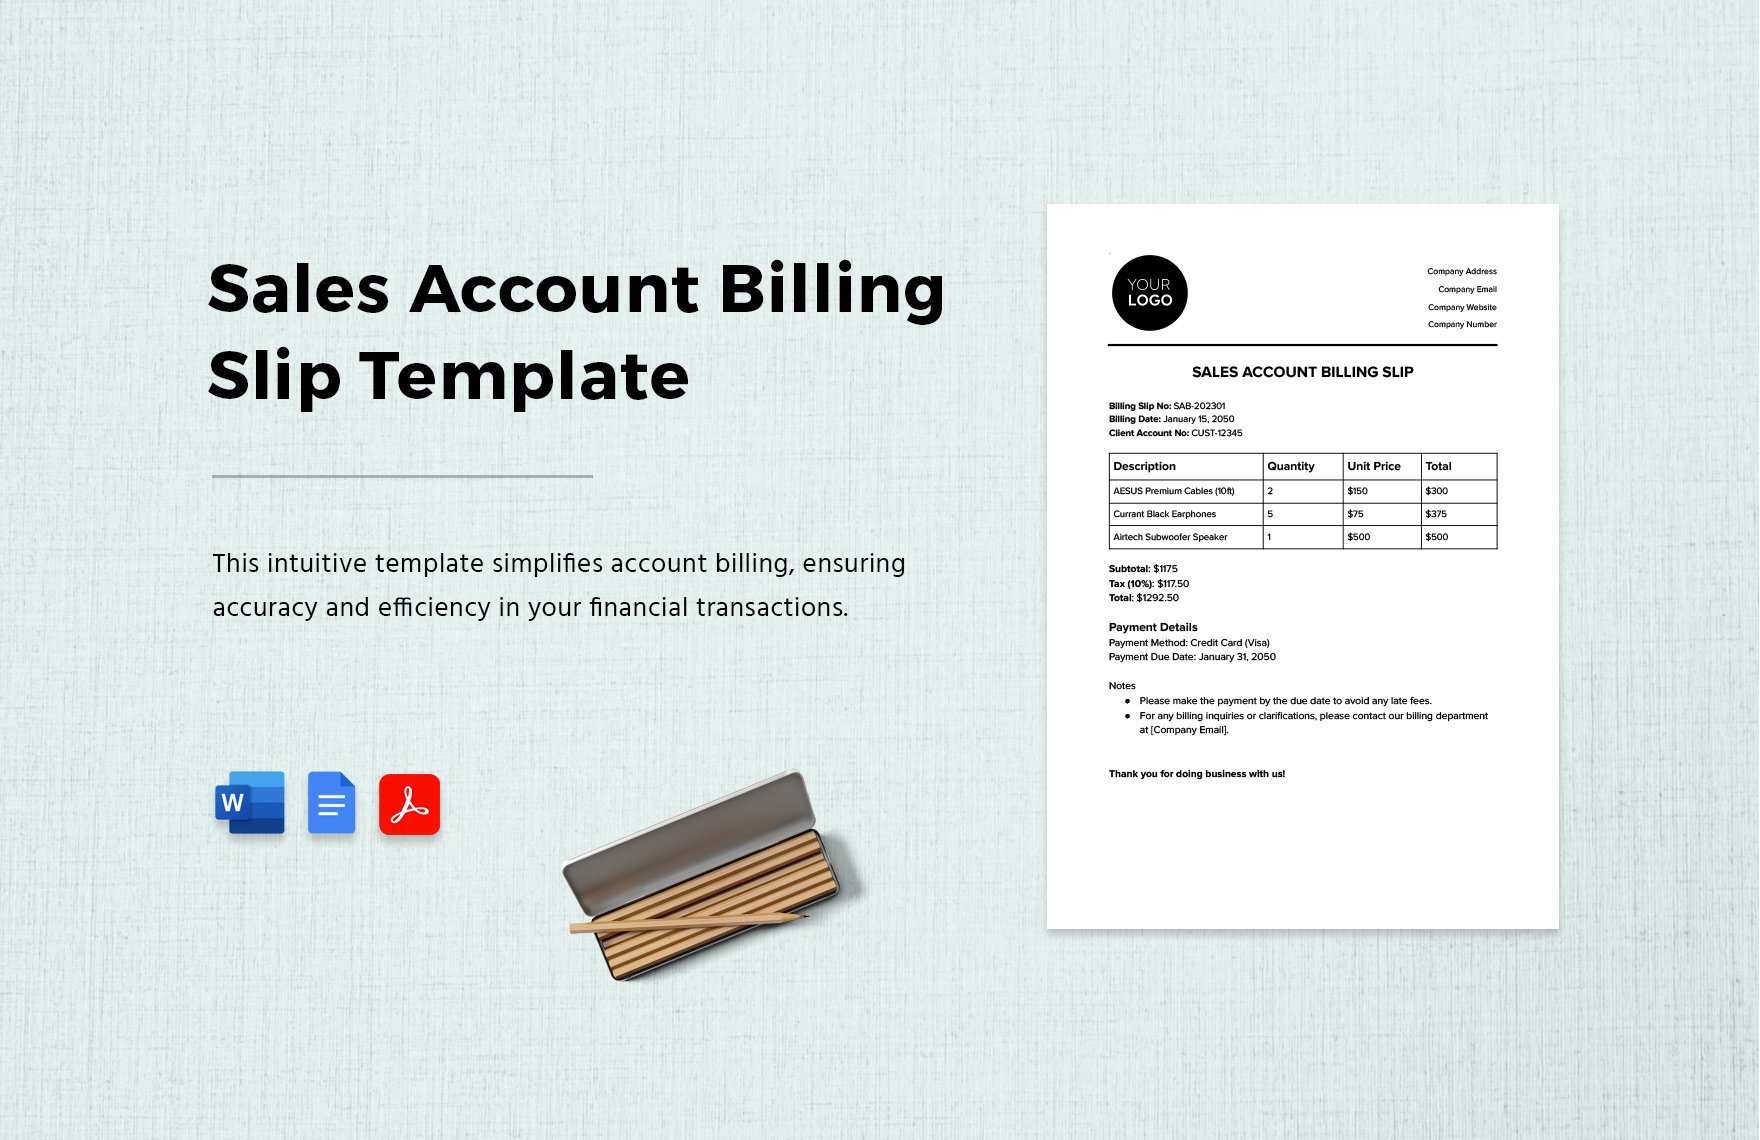 Sales Account Billing Slip Template in Word, Google Docs, PDF